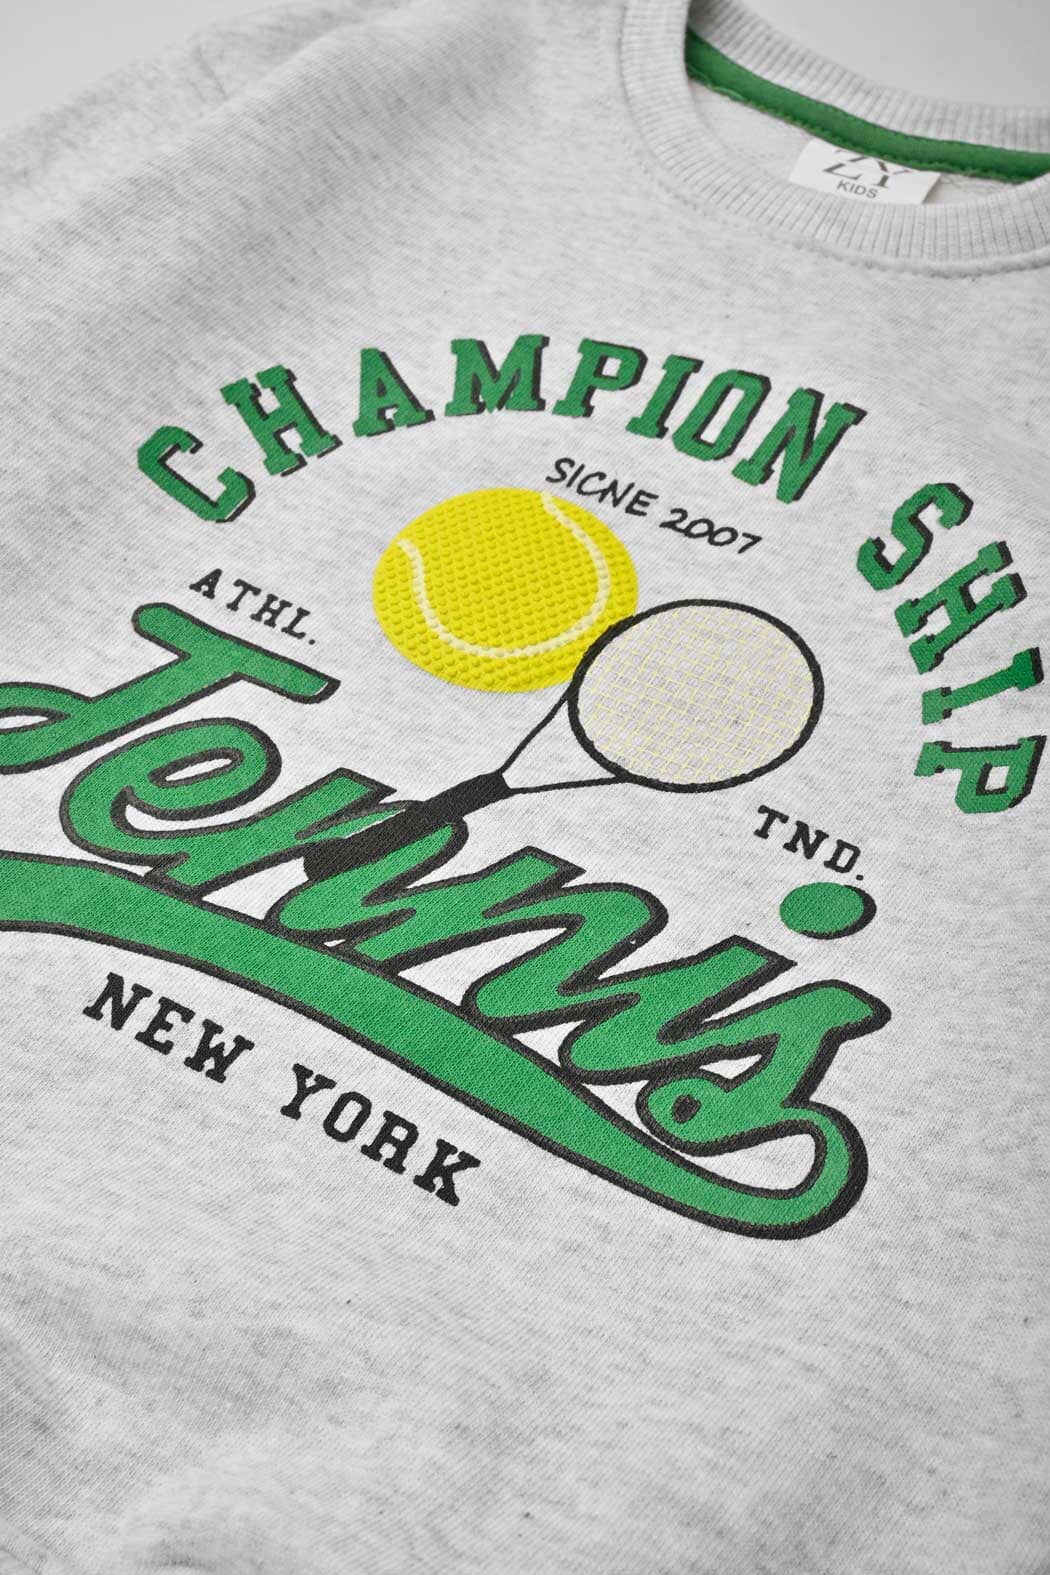 ZY Kid's Champion Ship Printed Terry Sweat Shirt Kid's Sweat Shirt SNR 